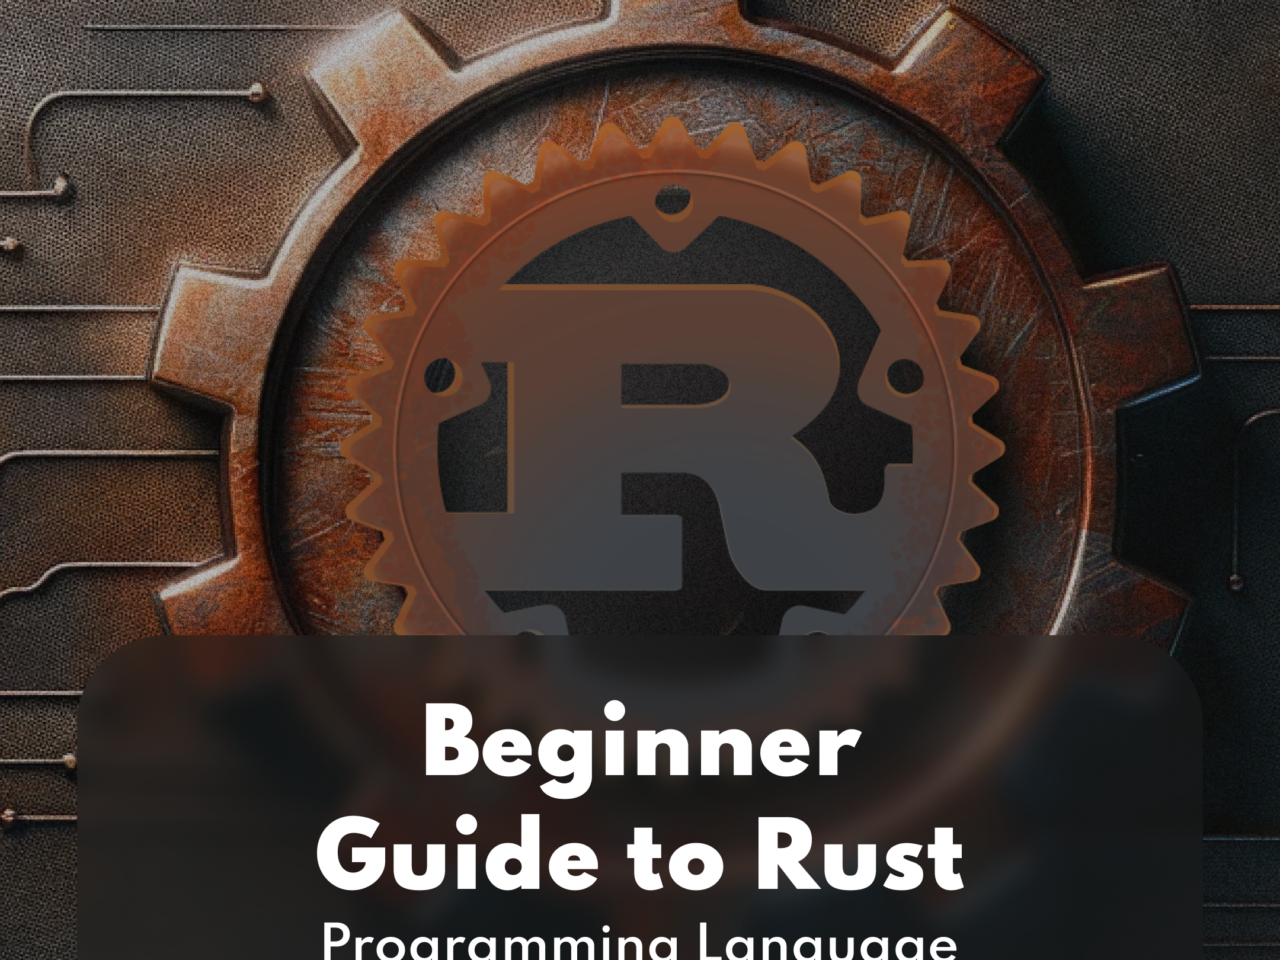 Beginner Guide to Rust programming language